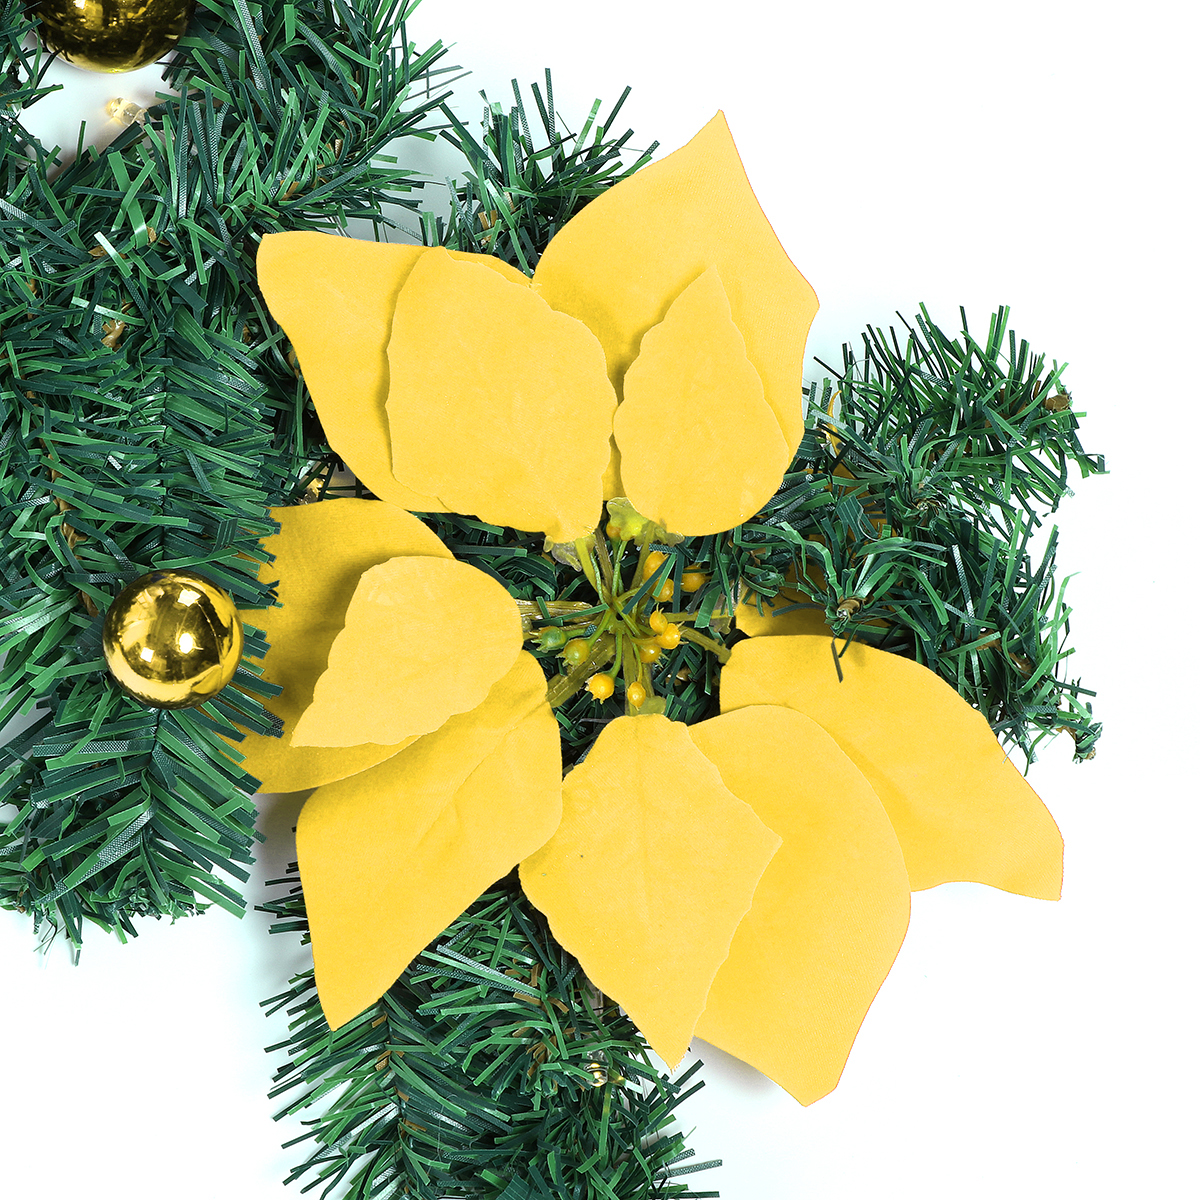 27m-Christmas-Tree-Wreath-Door-Hanging-Garland-Window-Ornament-Xmas-Party-Decor-Christmas-Decoration-1771839-11